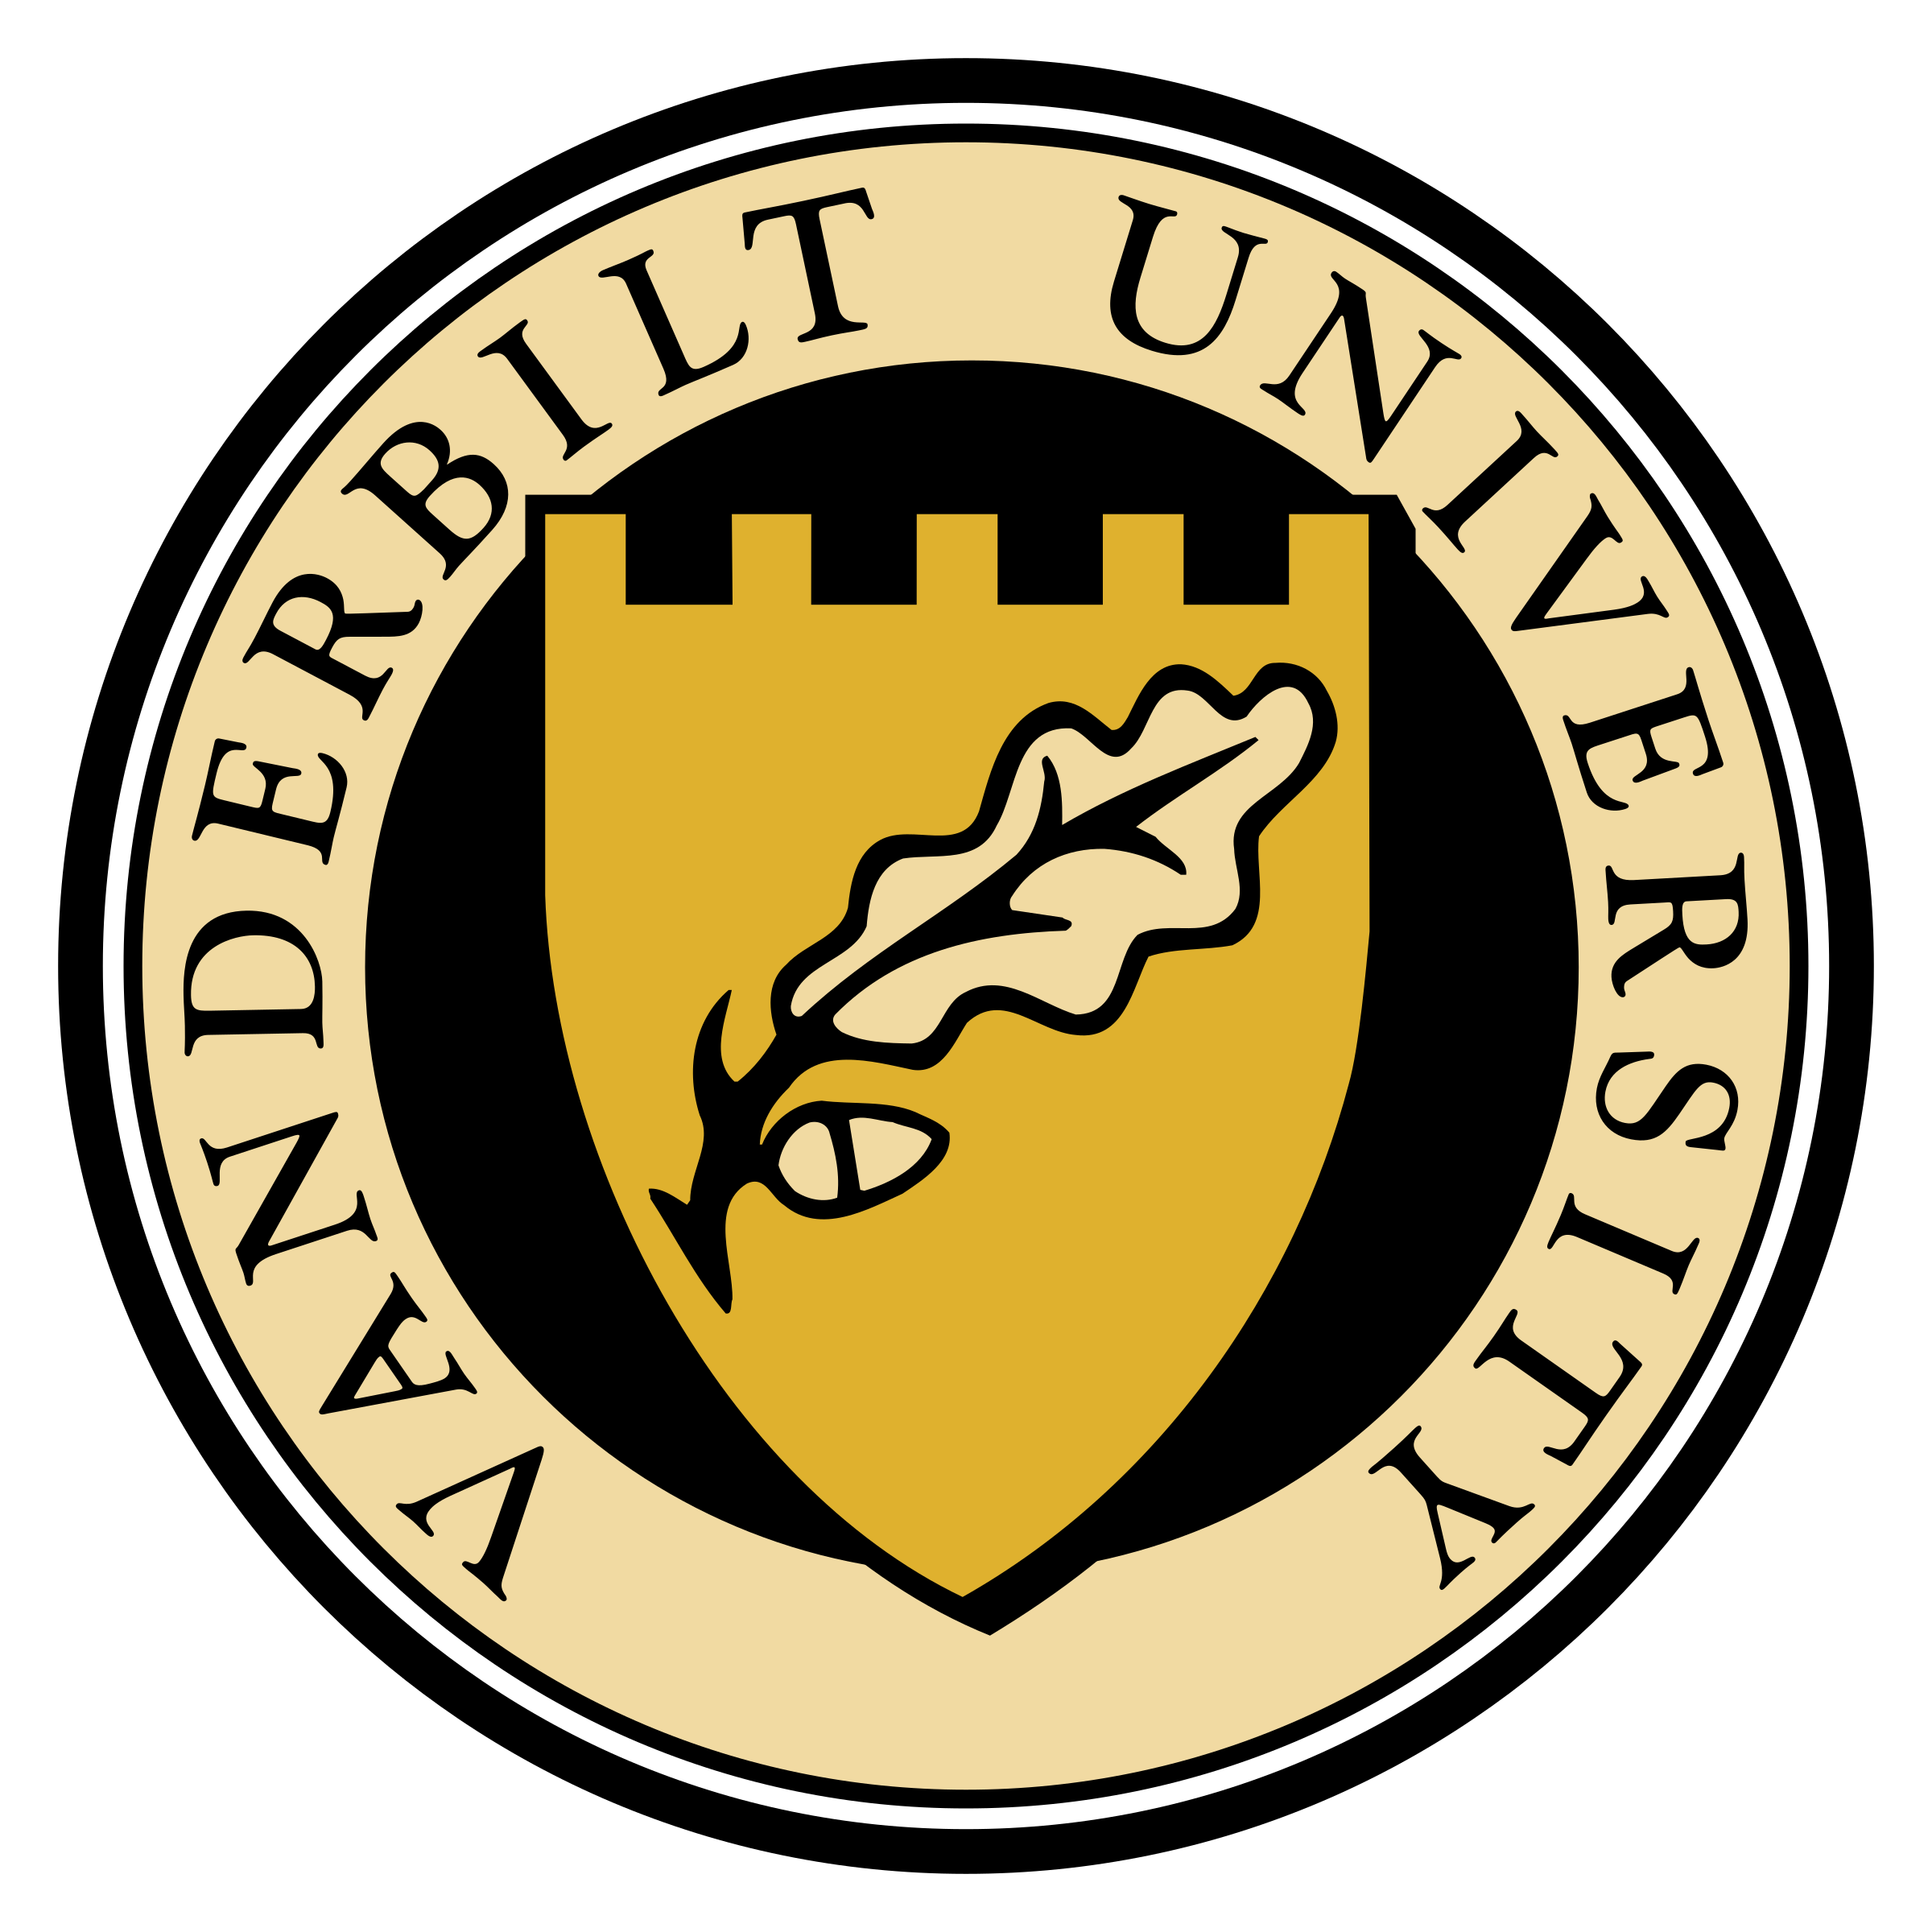 vanderbilt-university-1-logo-png-transparent.png